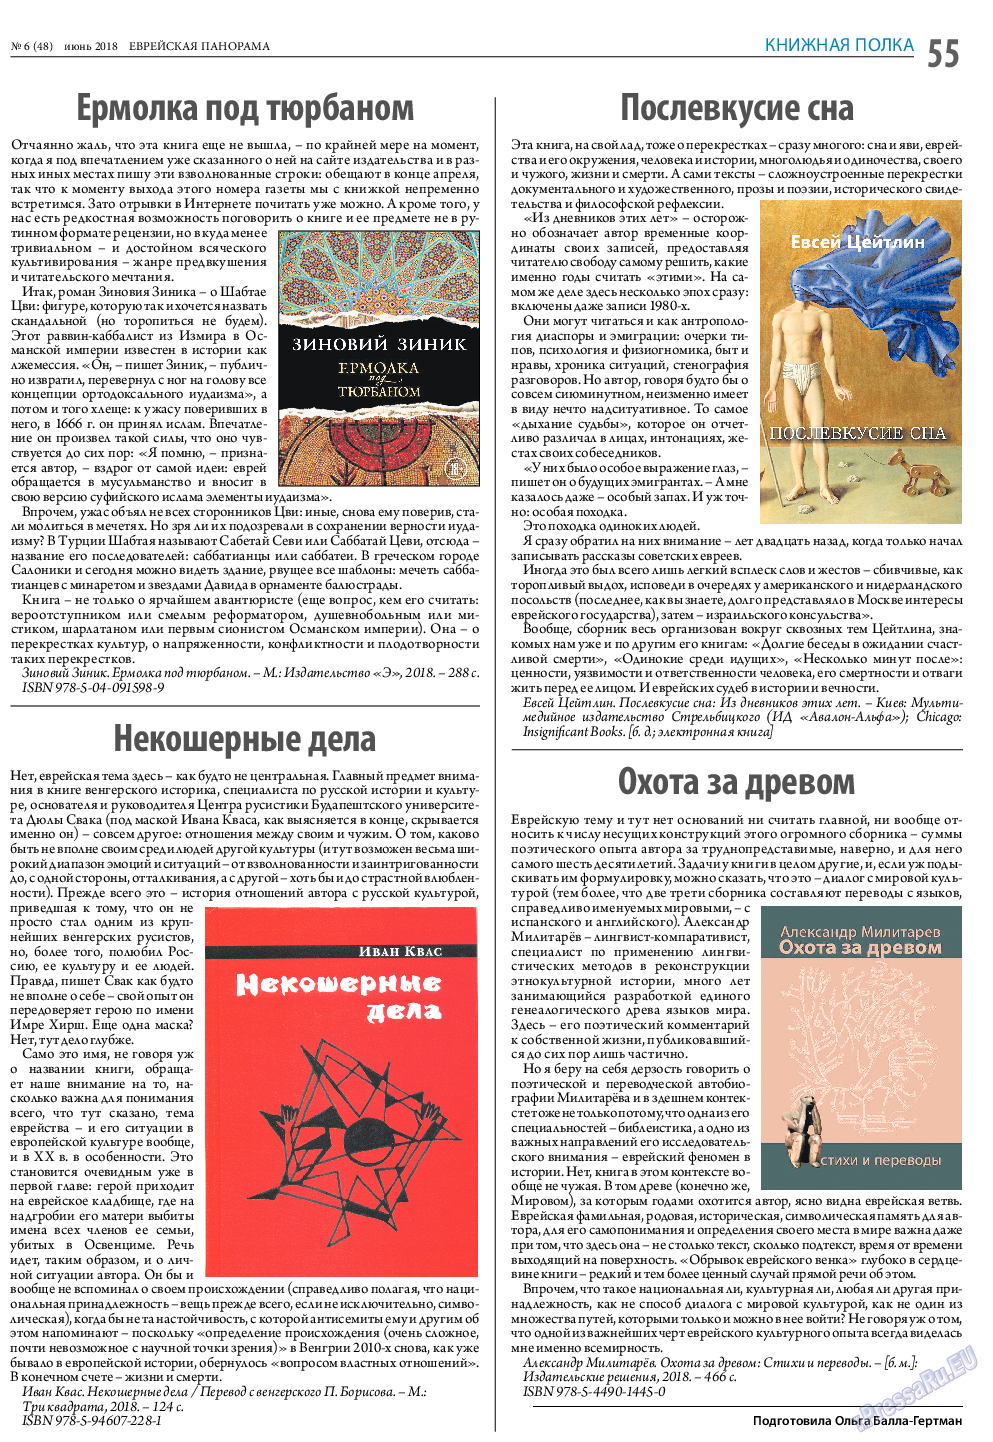 Еврейская панорама, газета. 2018 №6 стр.55